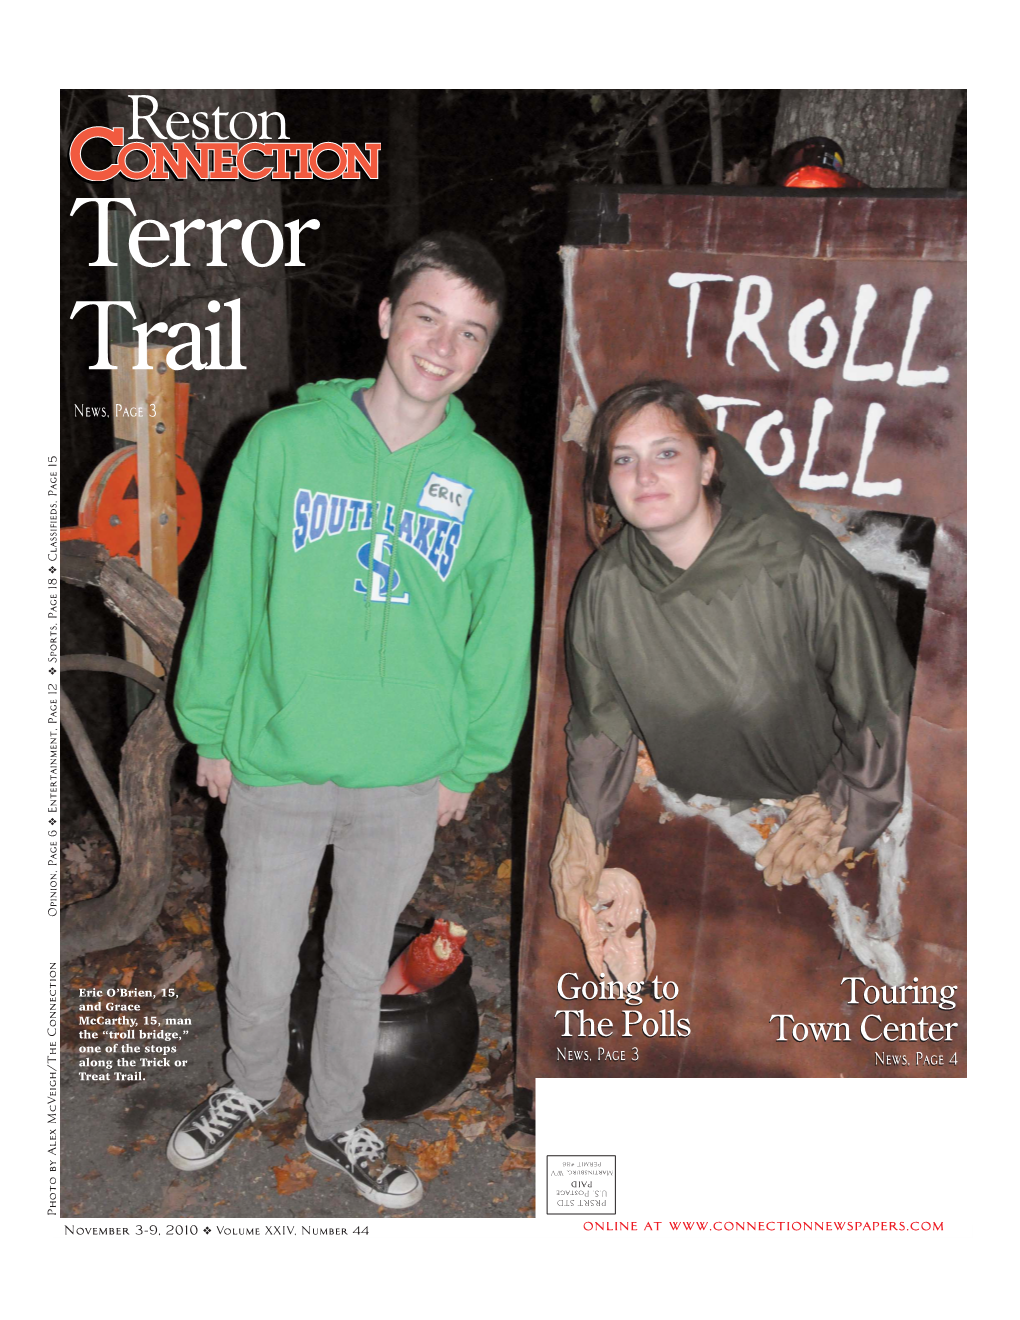 Reston Terror Trail News, Page 3